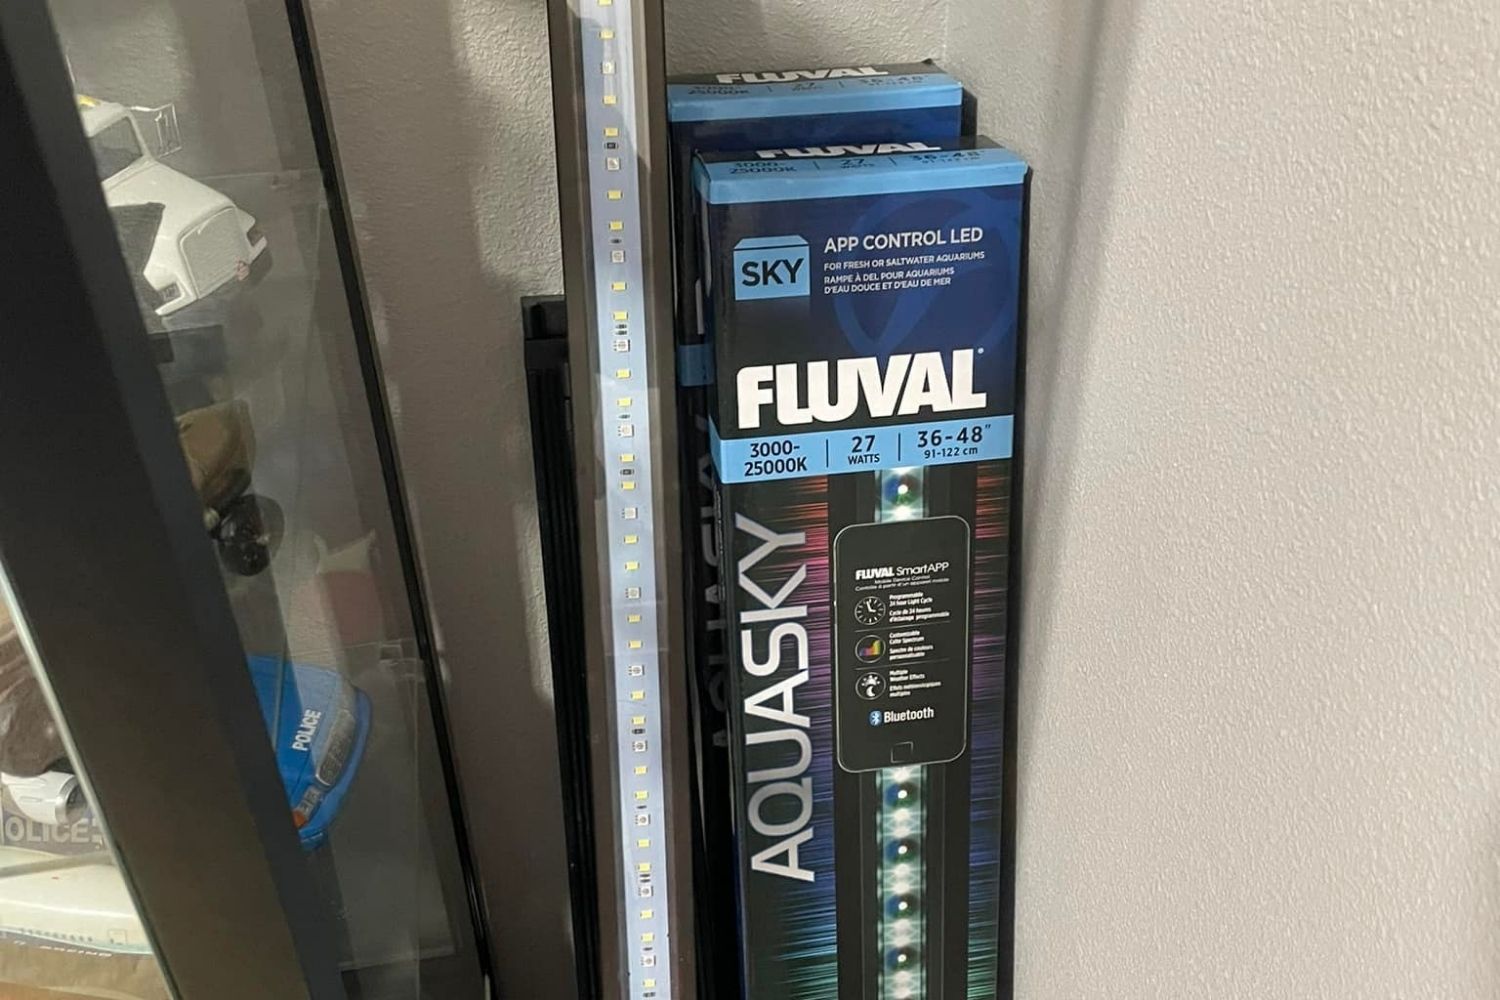 Fluval aquasky 2.0 Aquairum LED  Light Review Box